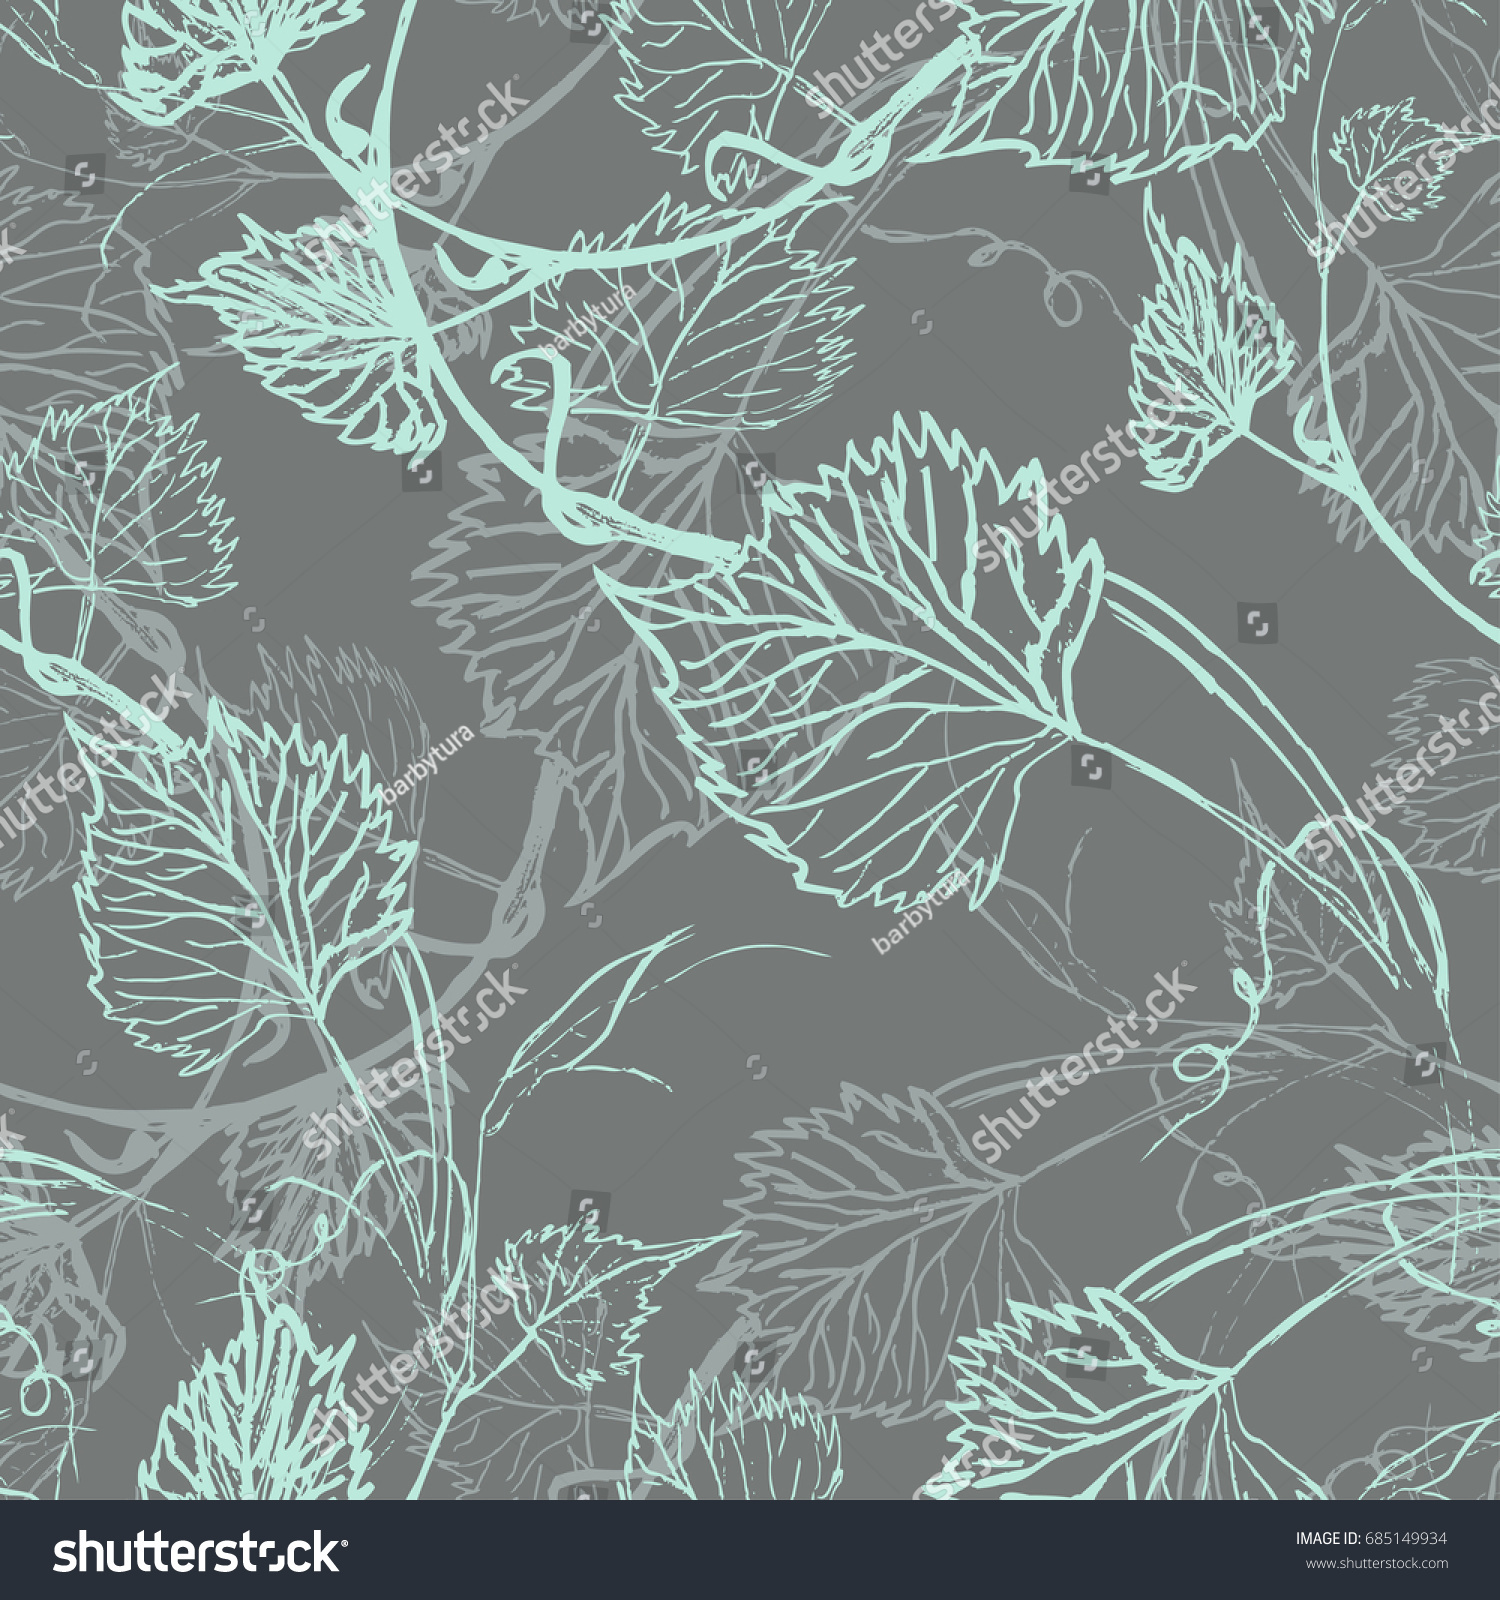 14,061 Vineyard Leaf Patterns Images, Stock Photos & Vectors | Shutterstock